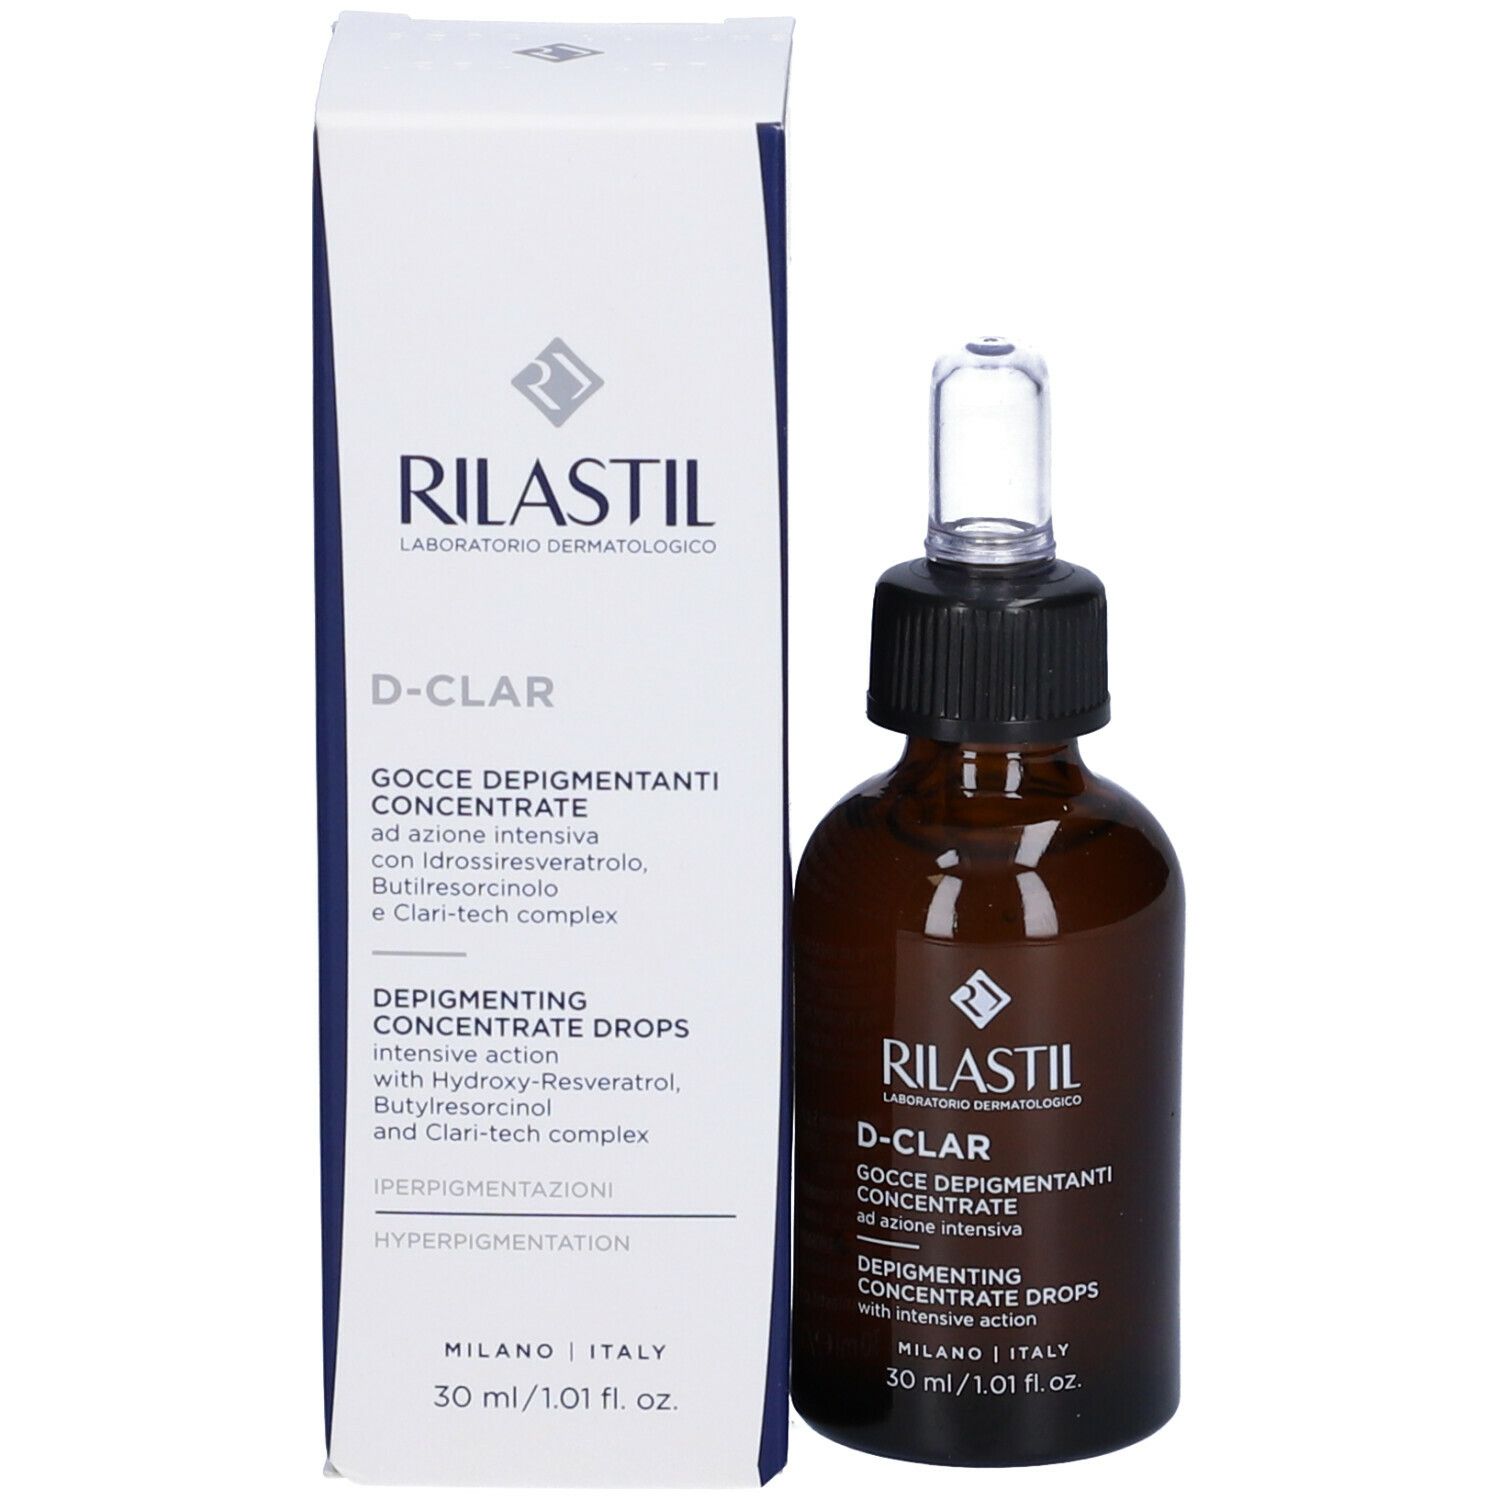 RILASTIL® D-CLAR Gocce Depigmentanti Concentrate